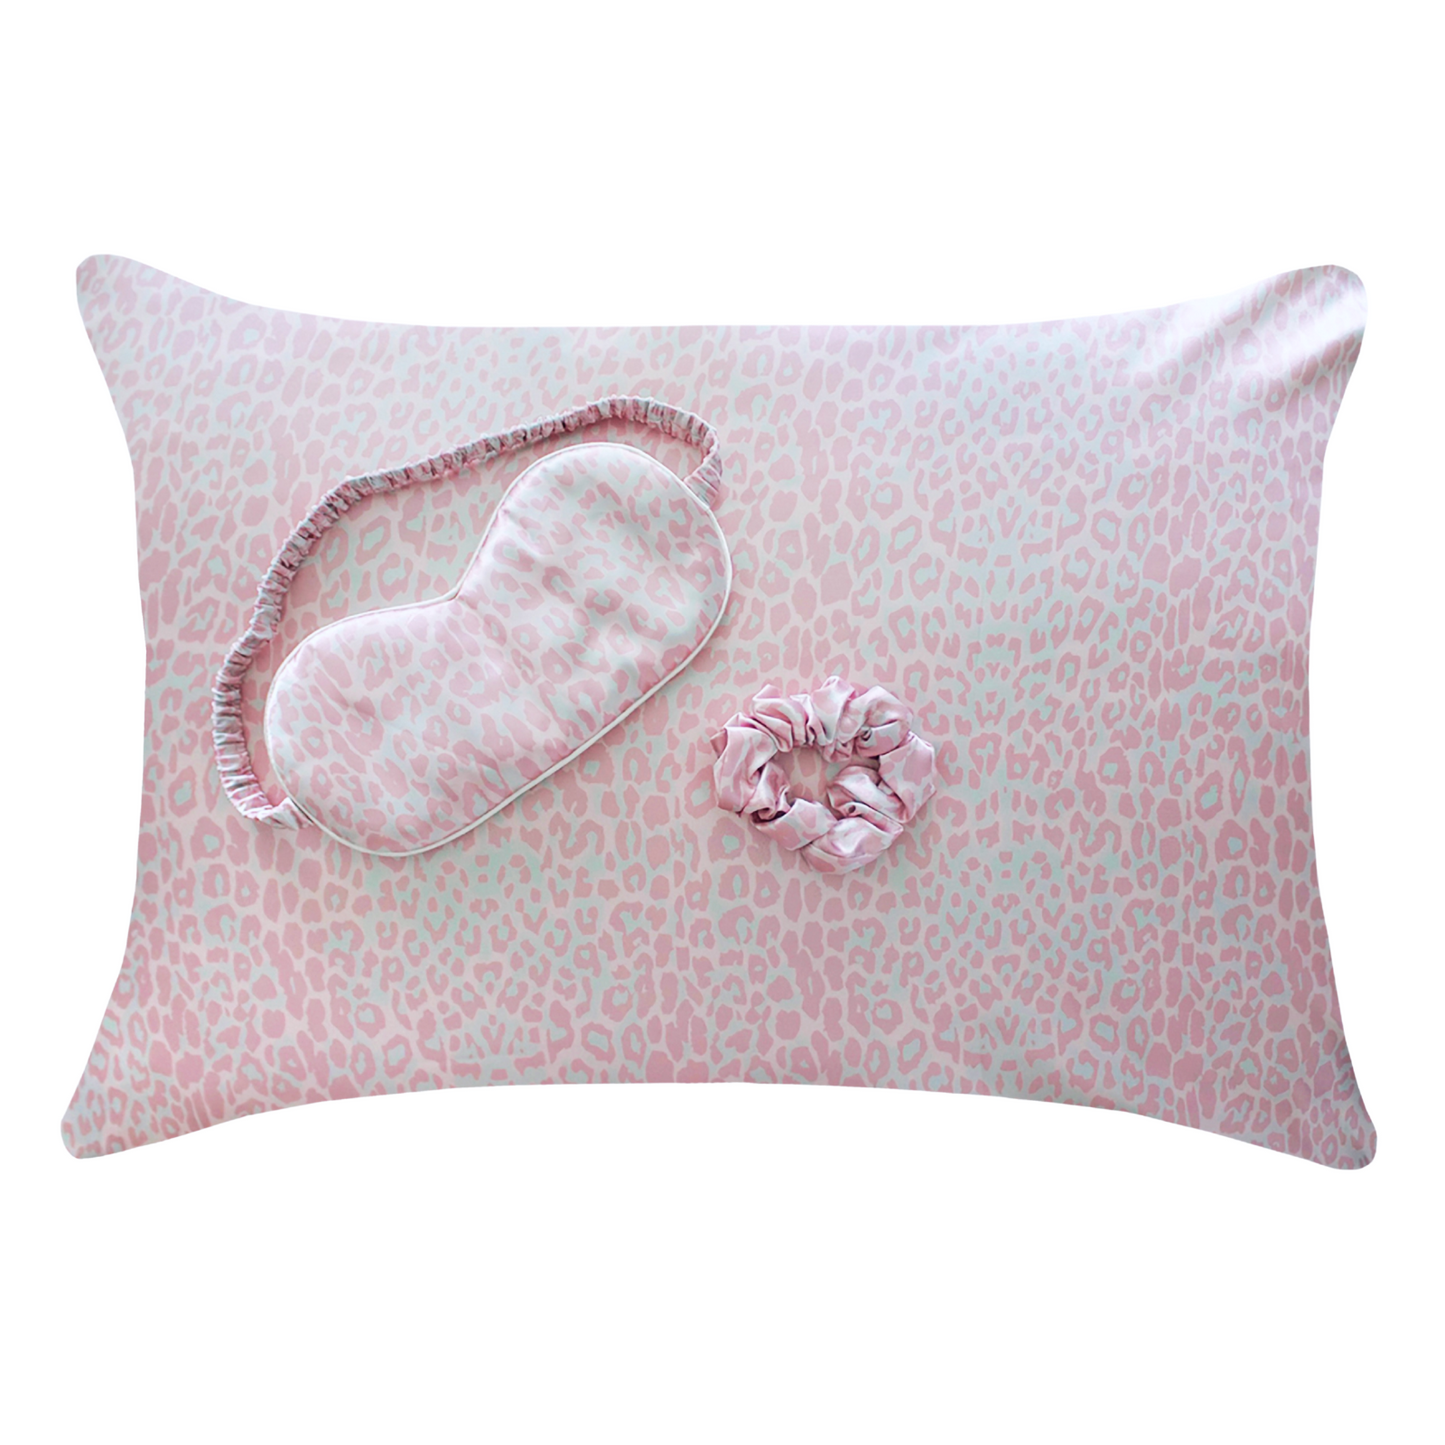 Satin Pillowcase Sleep Set - Pink Leopard